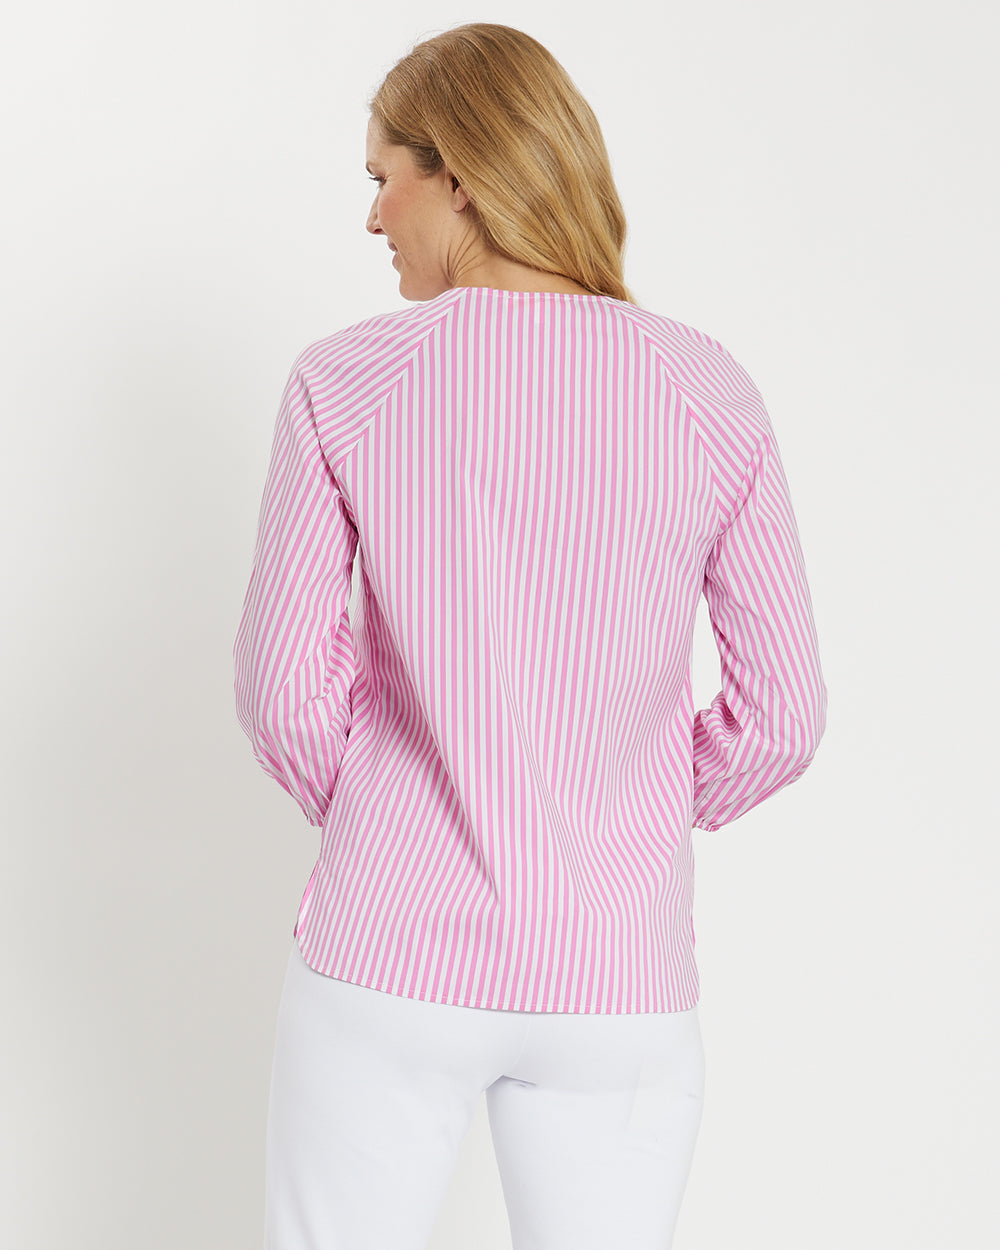 Rosaline Top - Cotton Shirting